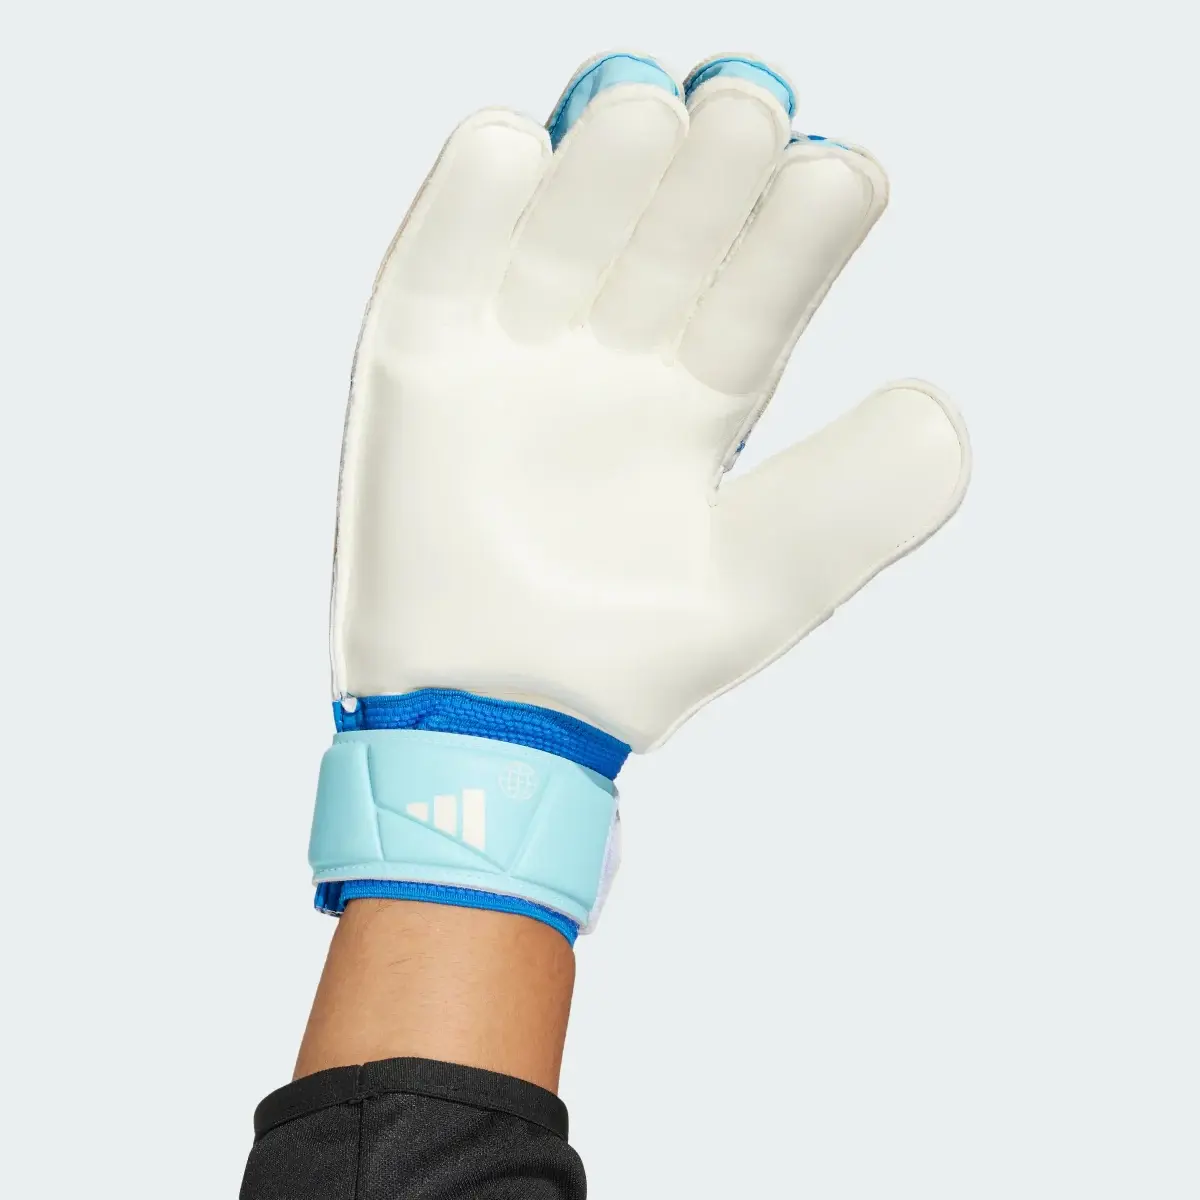 Adidas Predator Training Gloves. 2